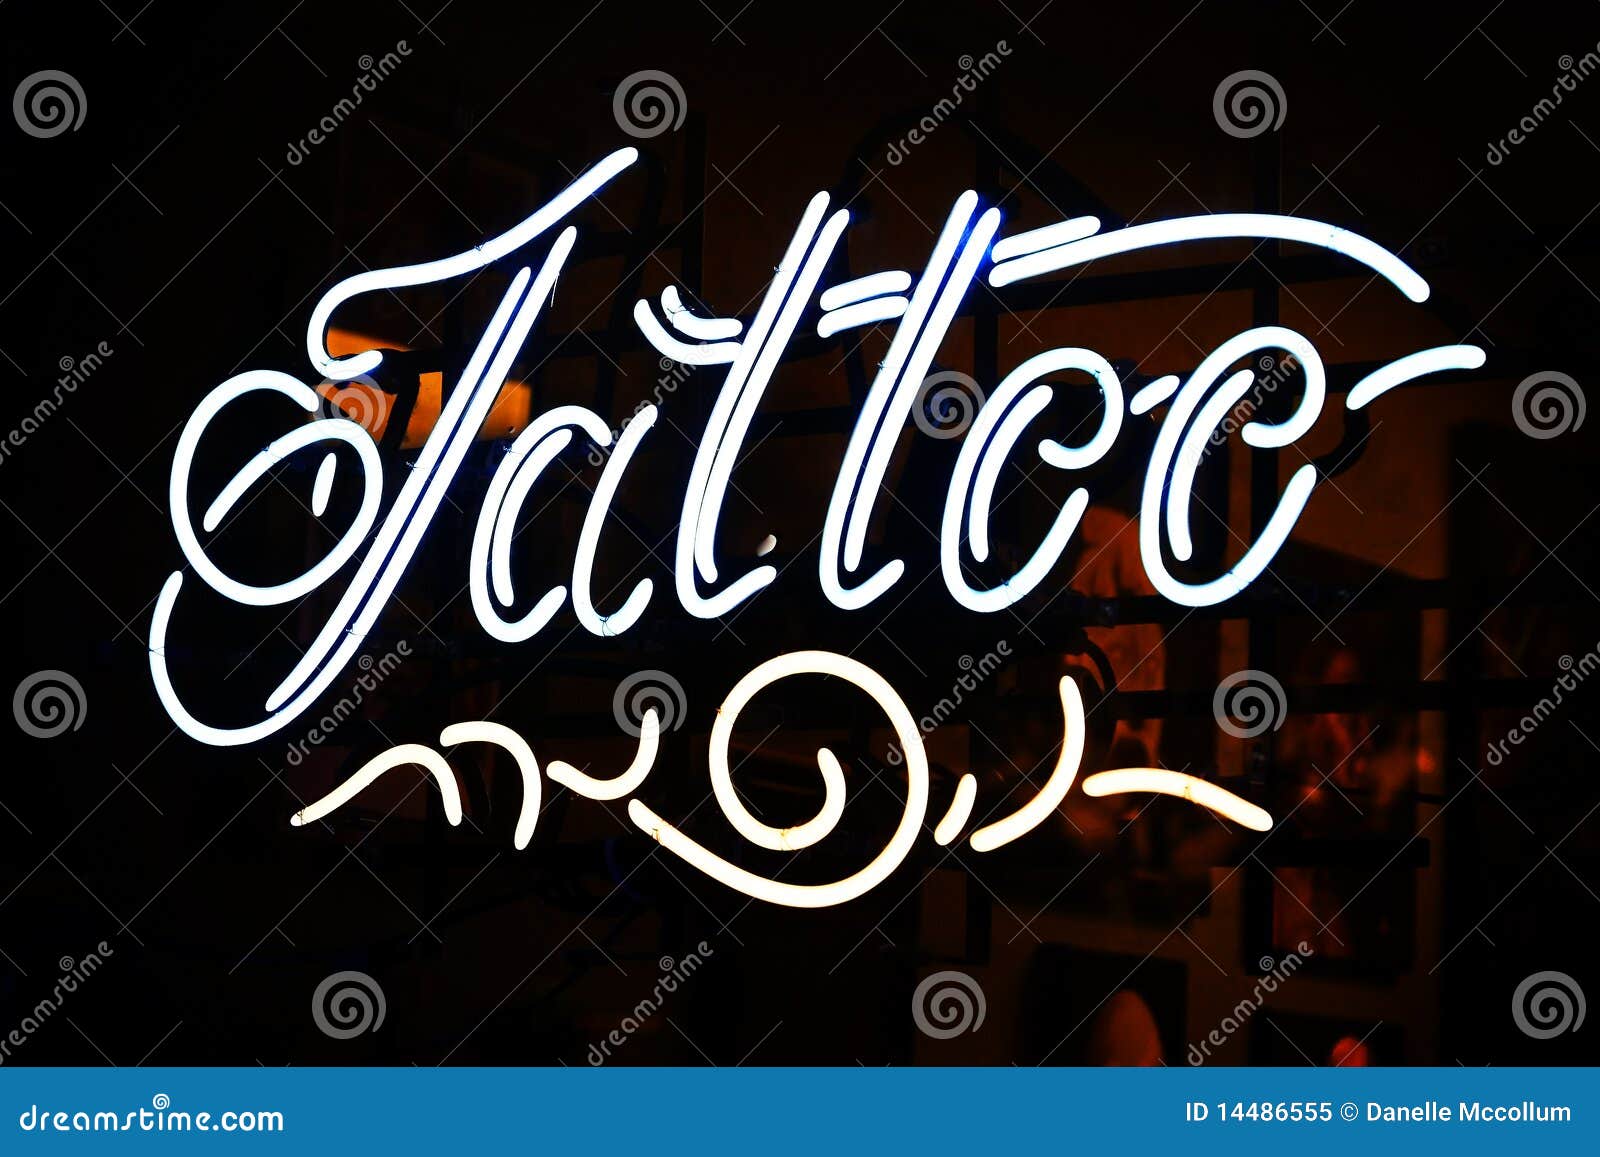 Buy Tattoo Policy Tattoo Shop Sign I Tattoo Shop Decor I Tattoo Artist Gift  I Tattoo Shop Wall Art I Tattoo Shop Decor Online in India - Etsy